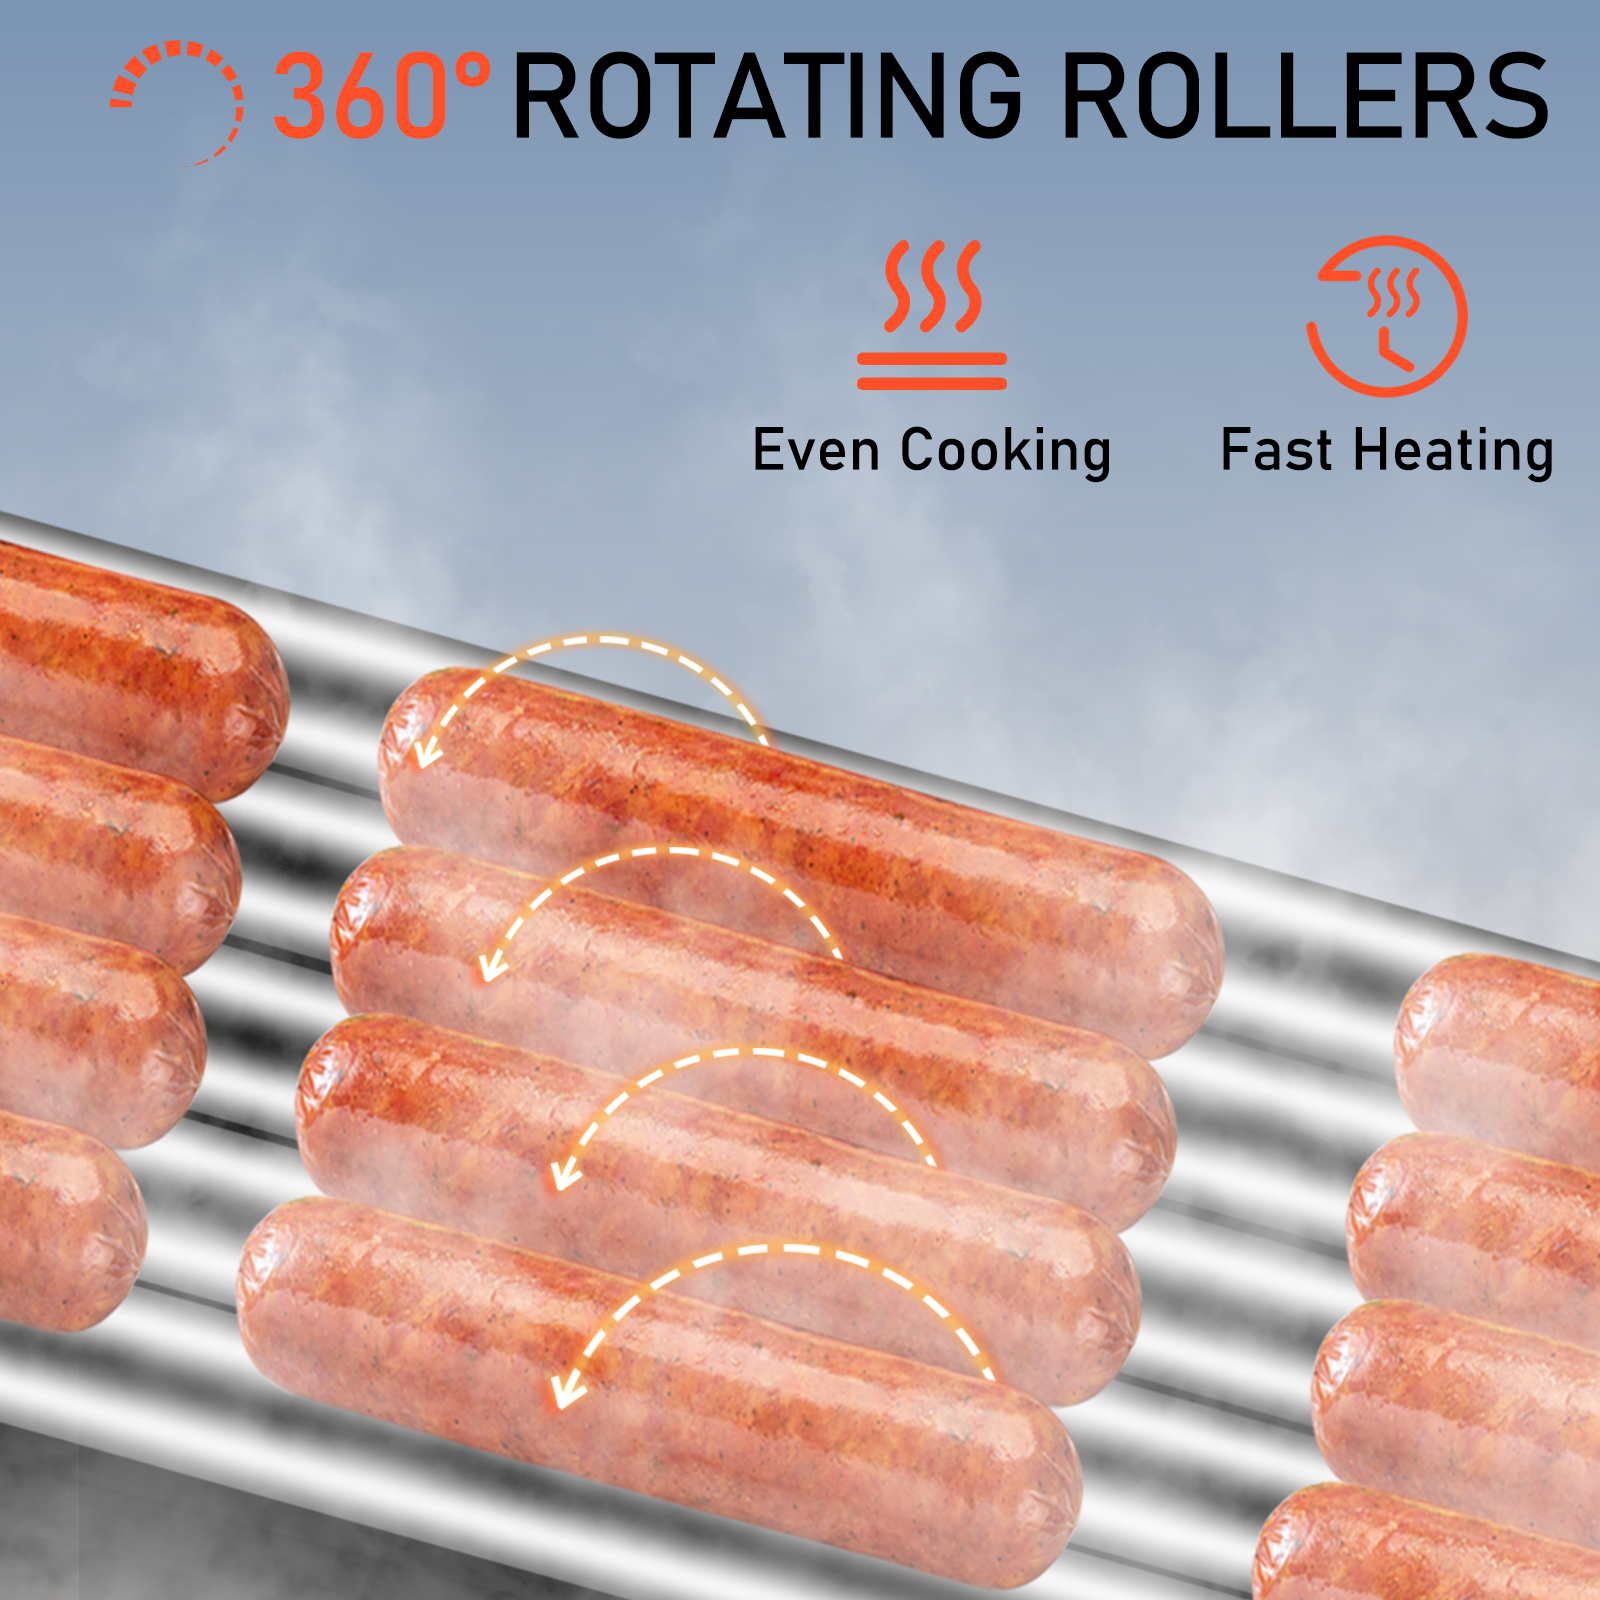 VEVOR Hot Dog Roller 7 Rollers 18 Hot Dogs Capacity 1050W